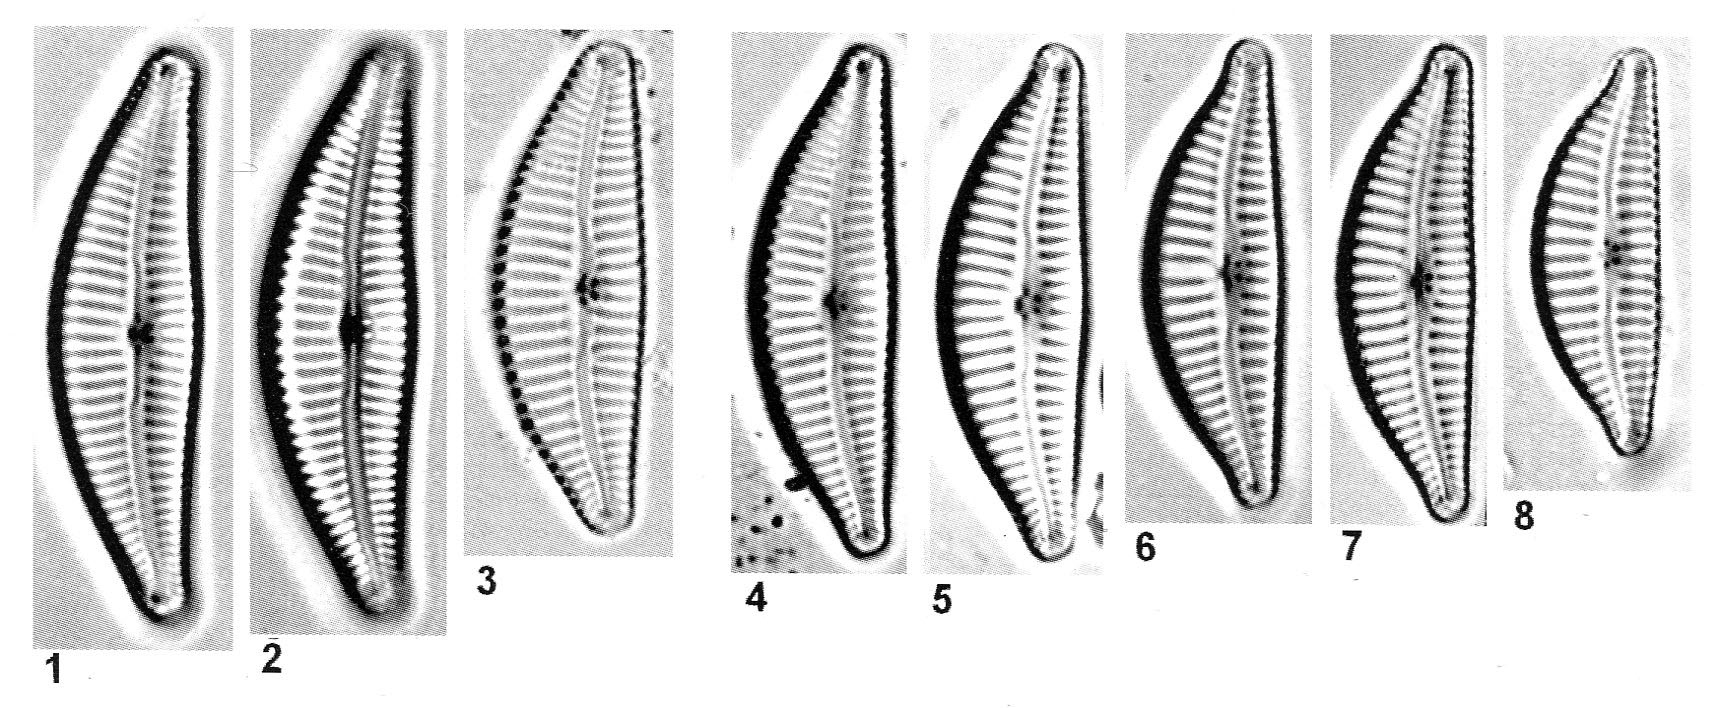 Cymbella affiniformis orig desc 2